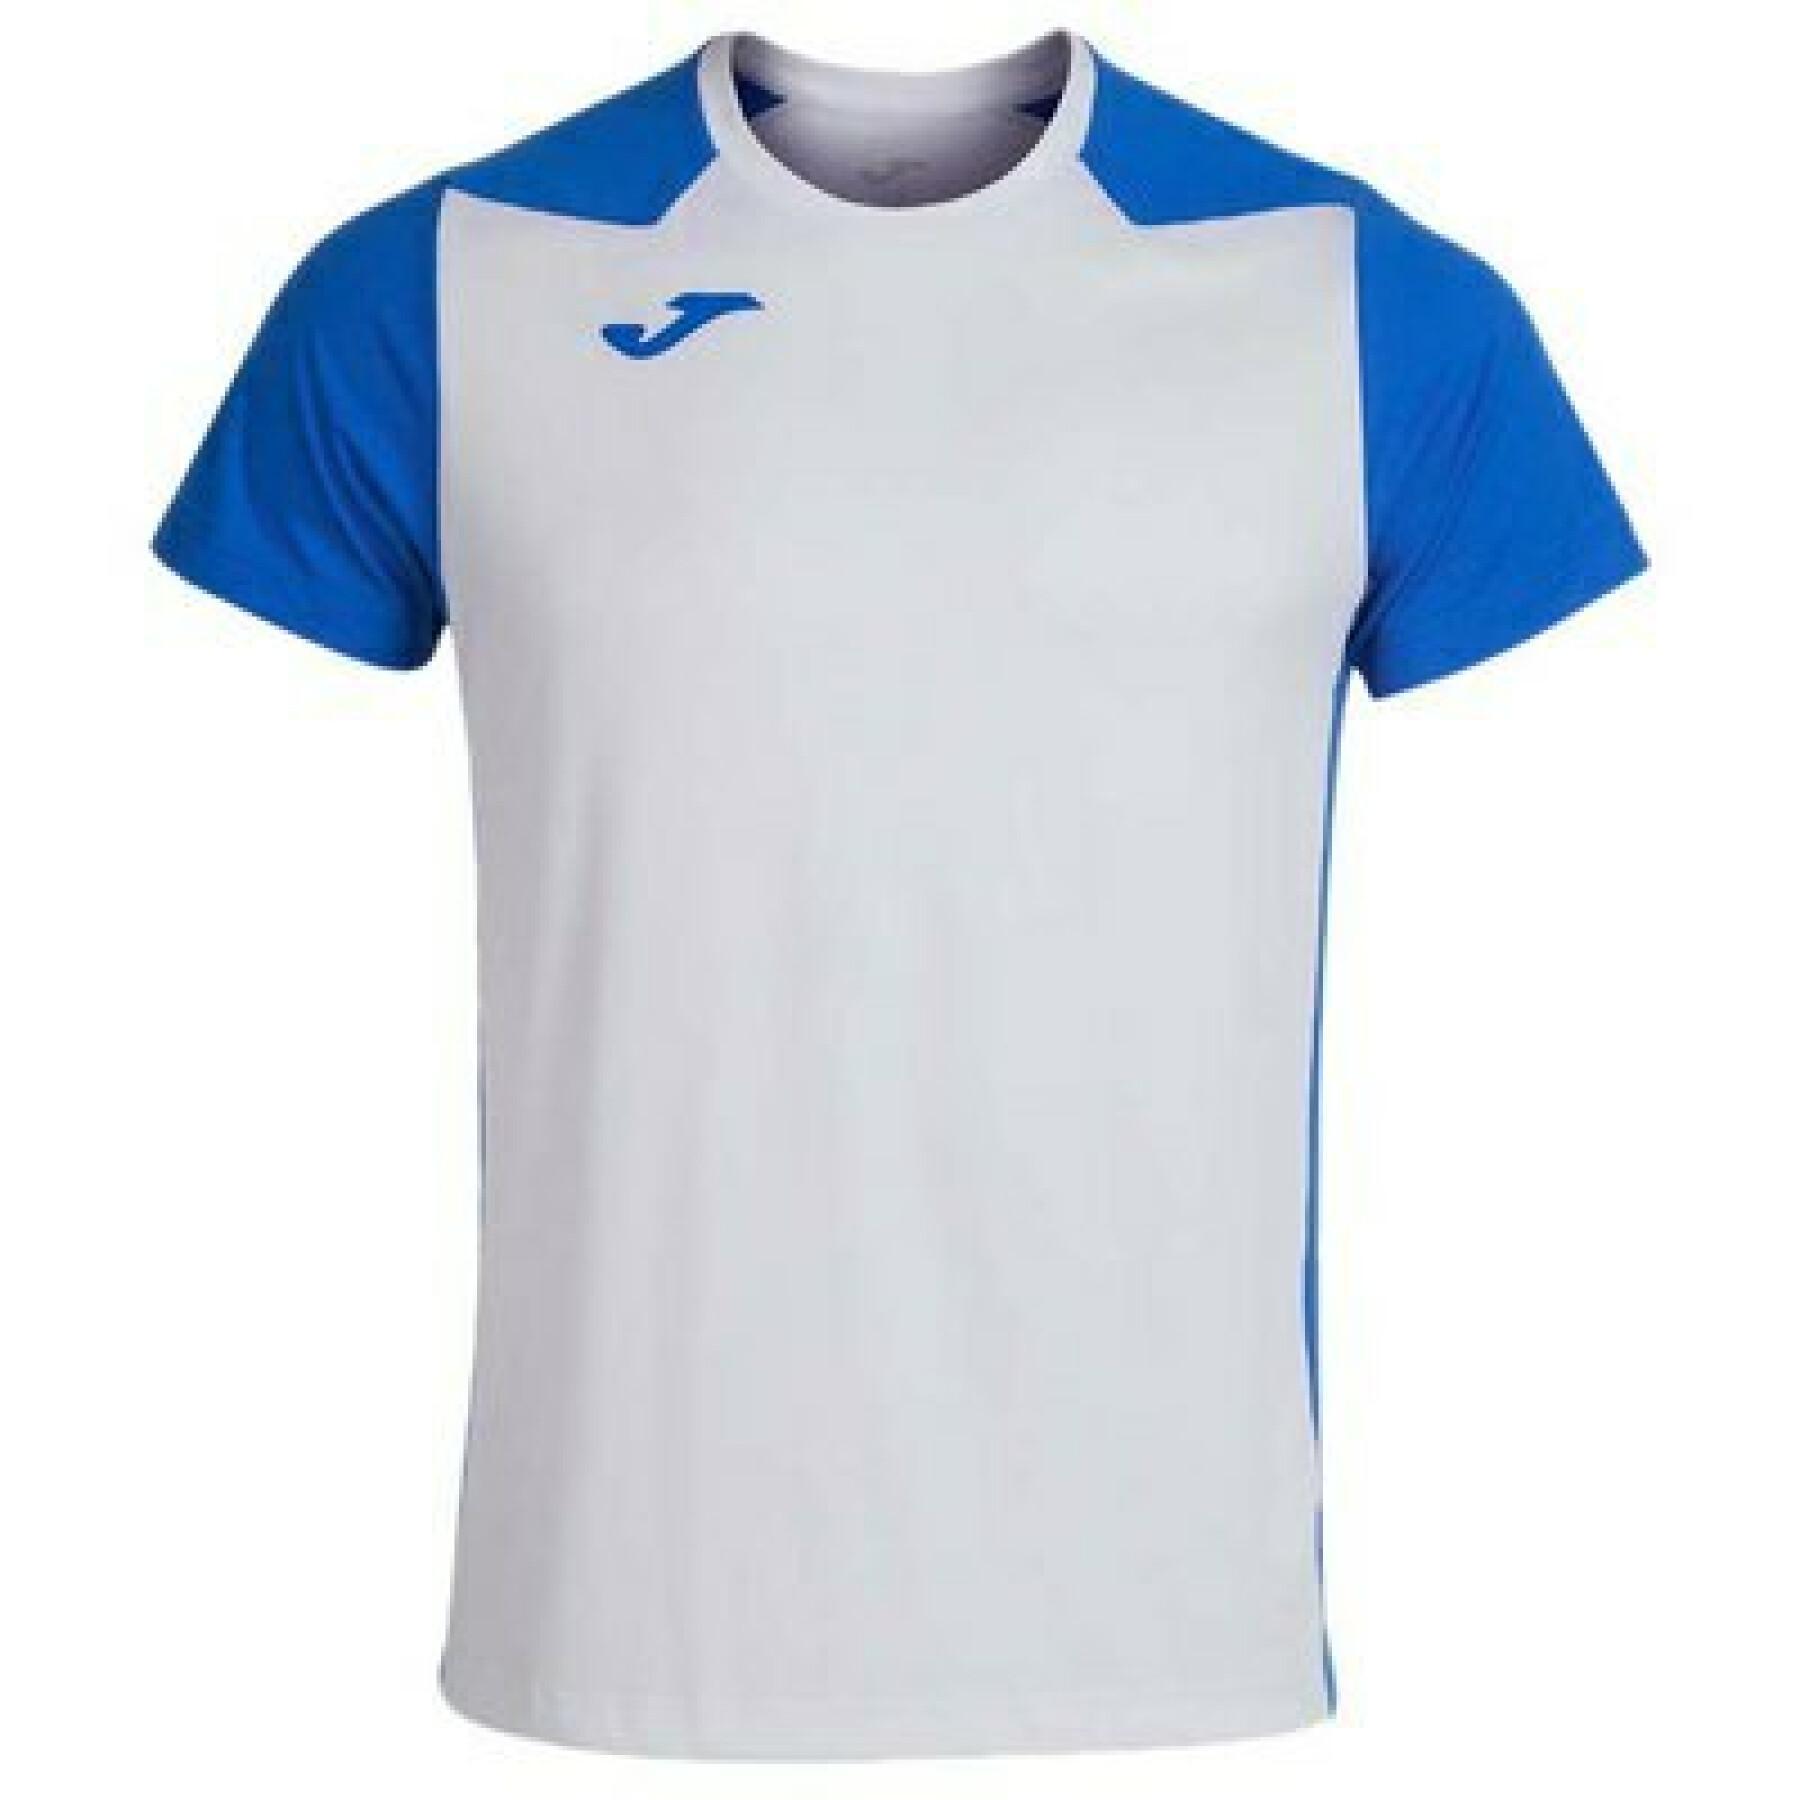 T-shirt Joma Record II - T-shirts & polo shirts - Men's wear - Handball ...